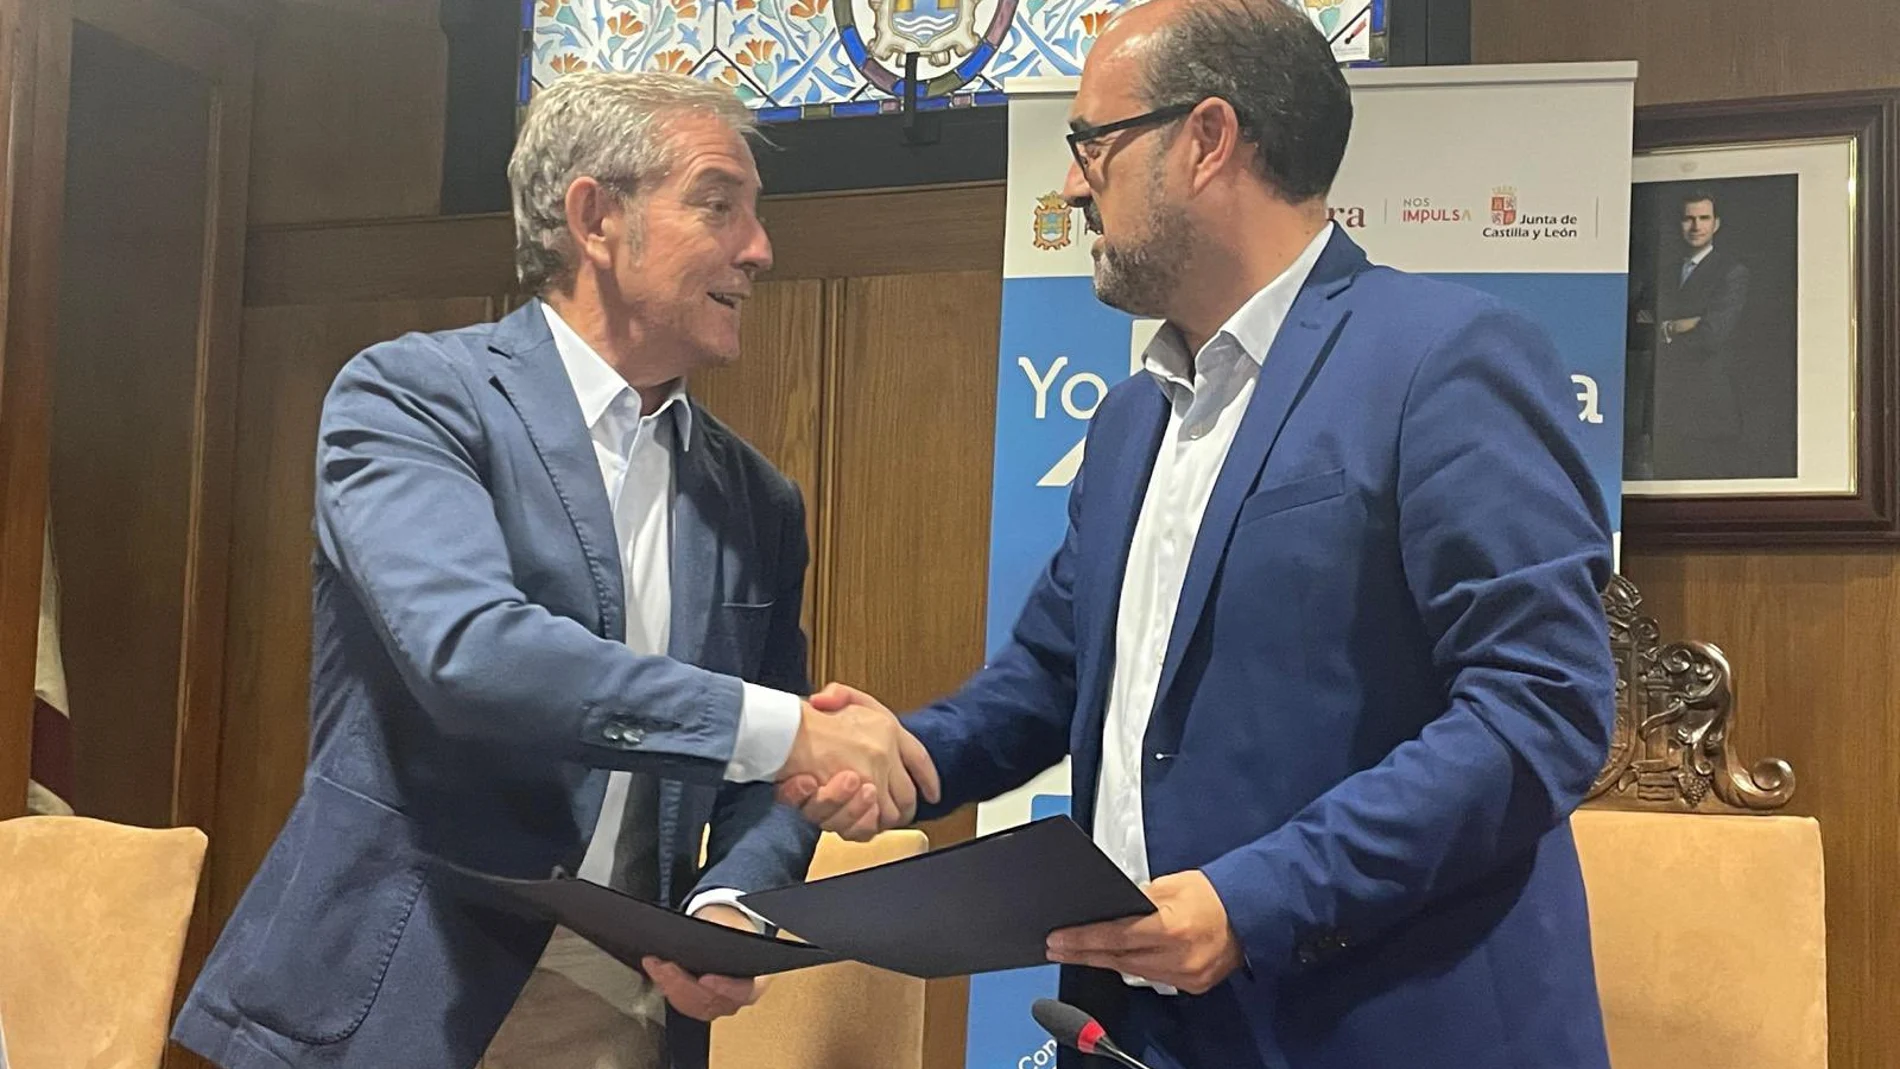 Marco Morala y Javier Vega firman el acuerdo del programa "Yo Ponferrada ¿tú?"